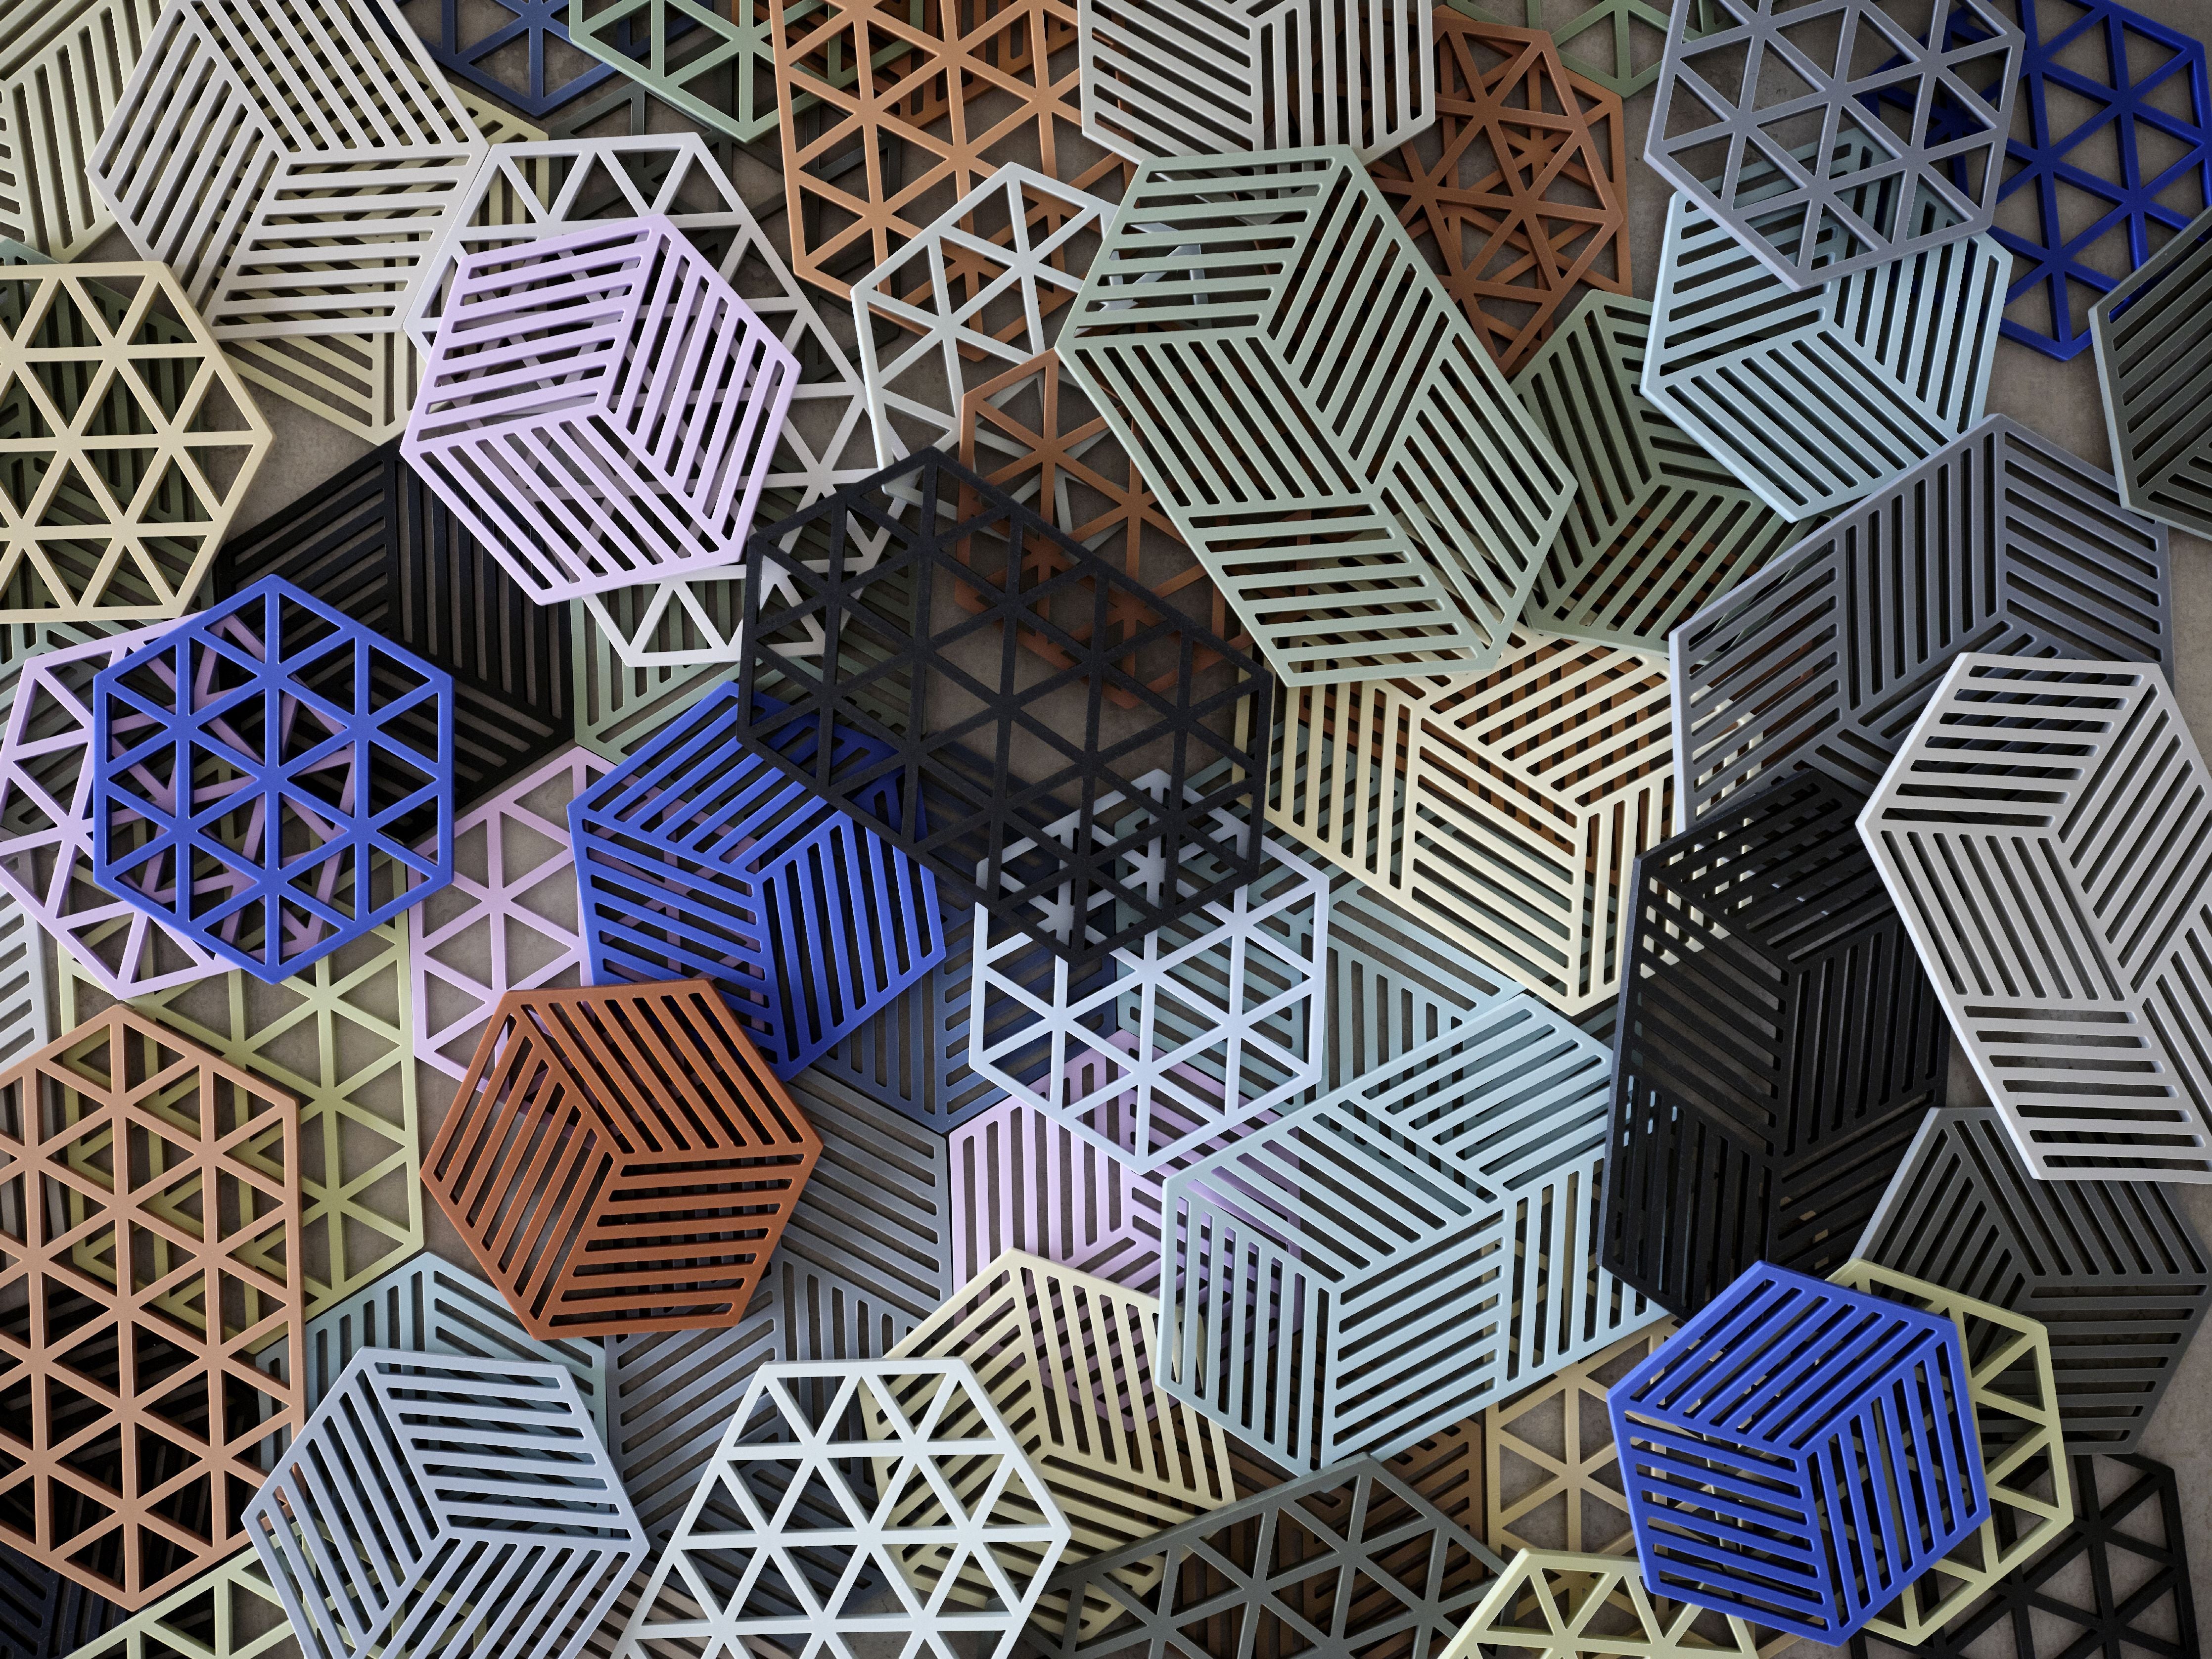 Zone Danmörk Hexagon Trivet 24 x 14 x 0,9 cm, svartur